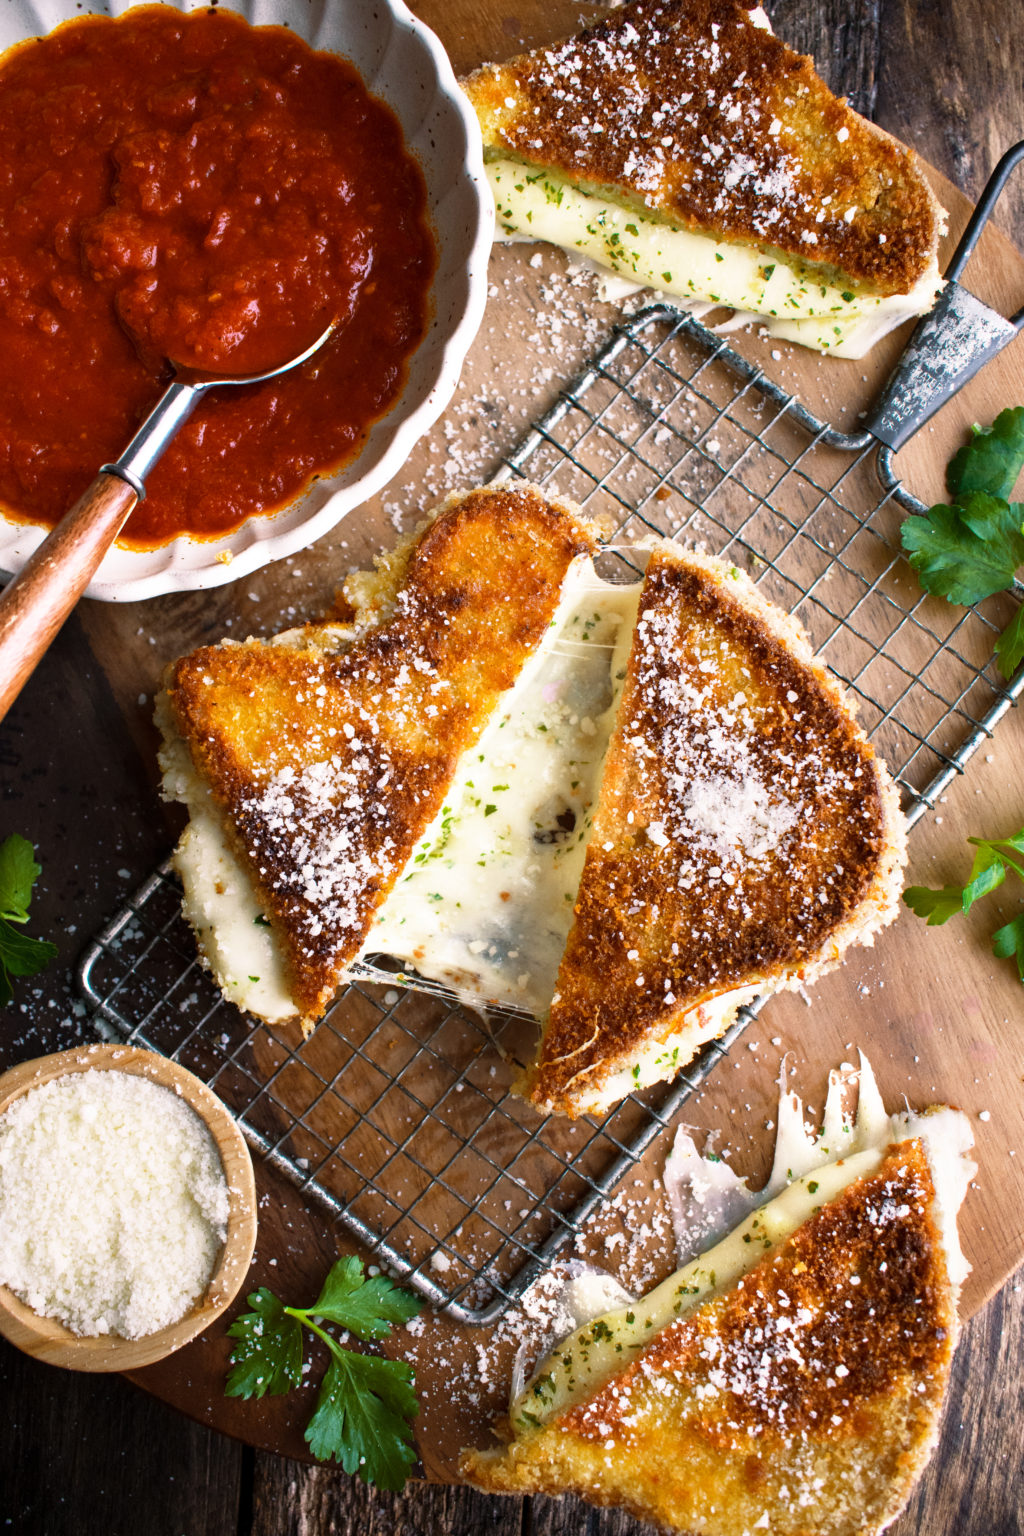 Fried Mozzarella Sandwiches on Herby Garlic Bread - The Original Dish